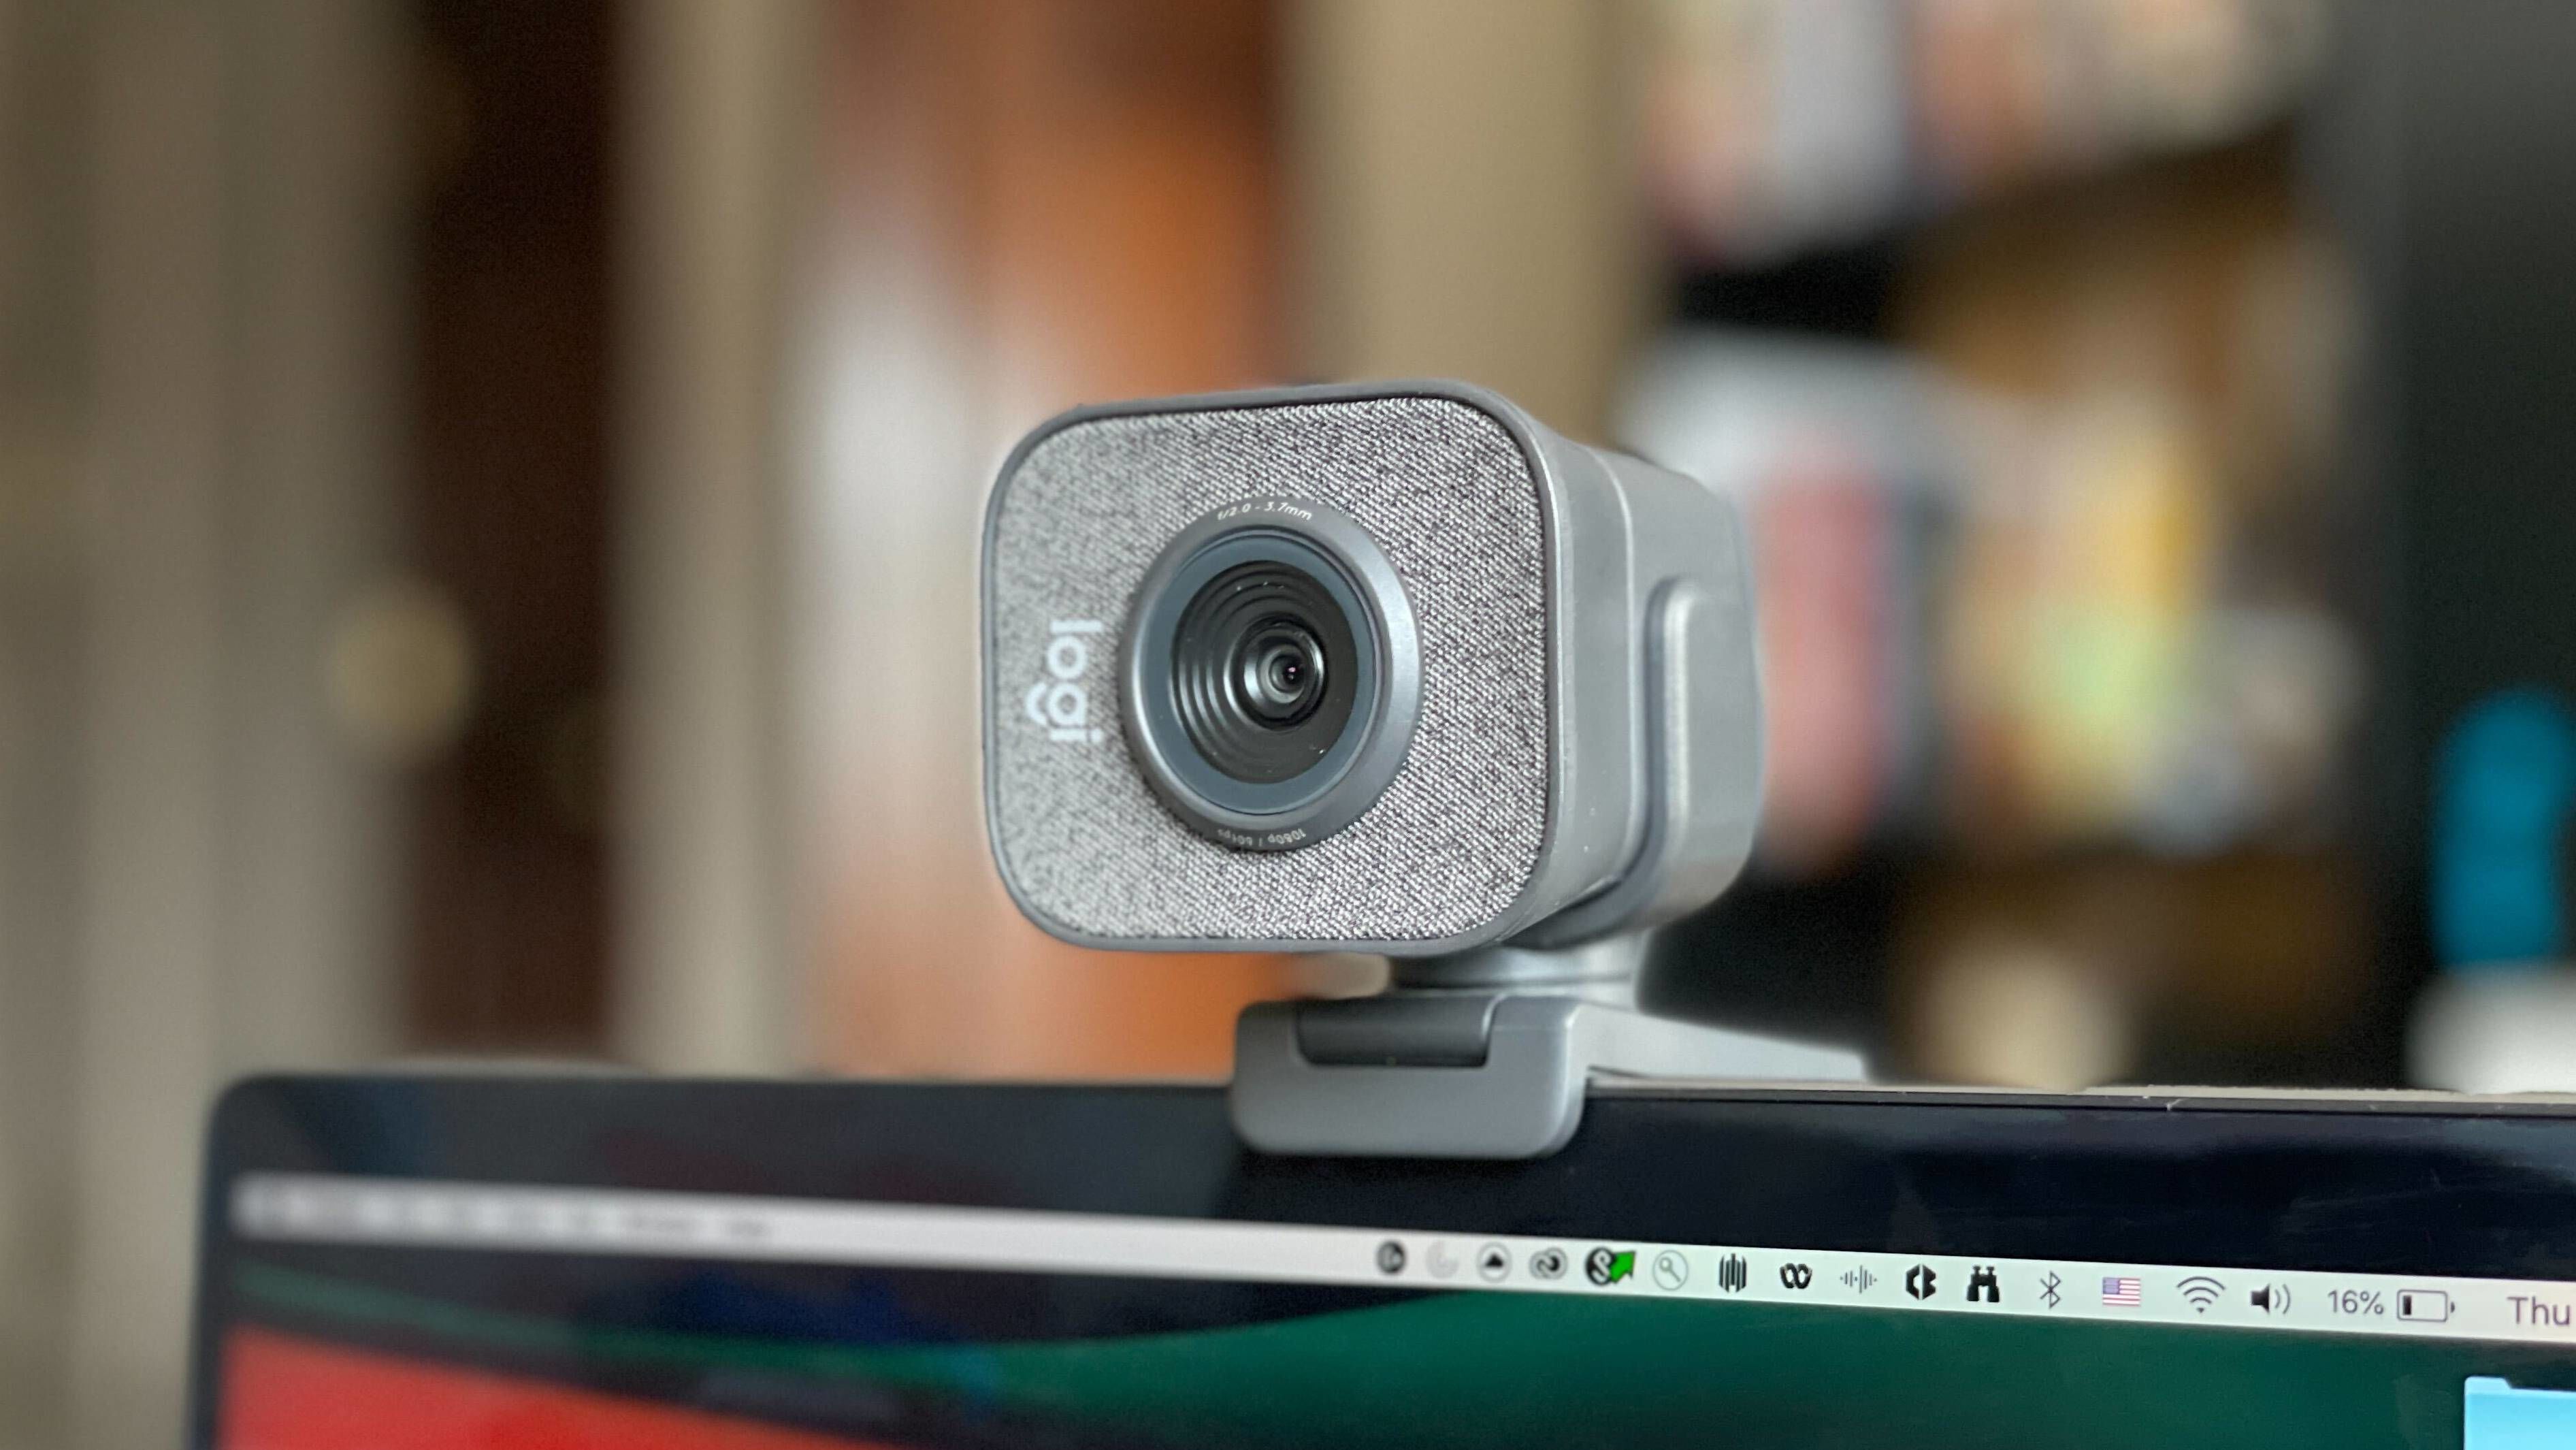 Review: Improve Telehealth with the Logitech C920 HD Pro Webcam